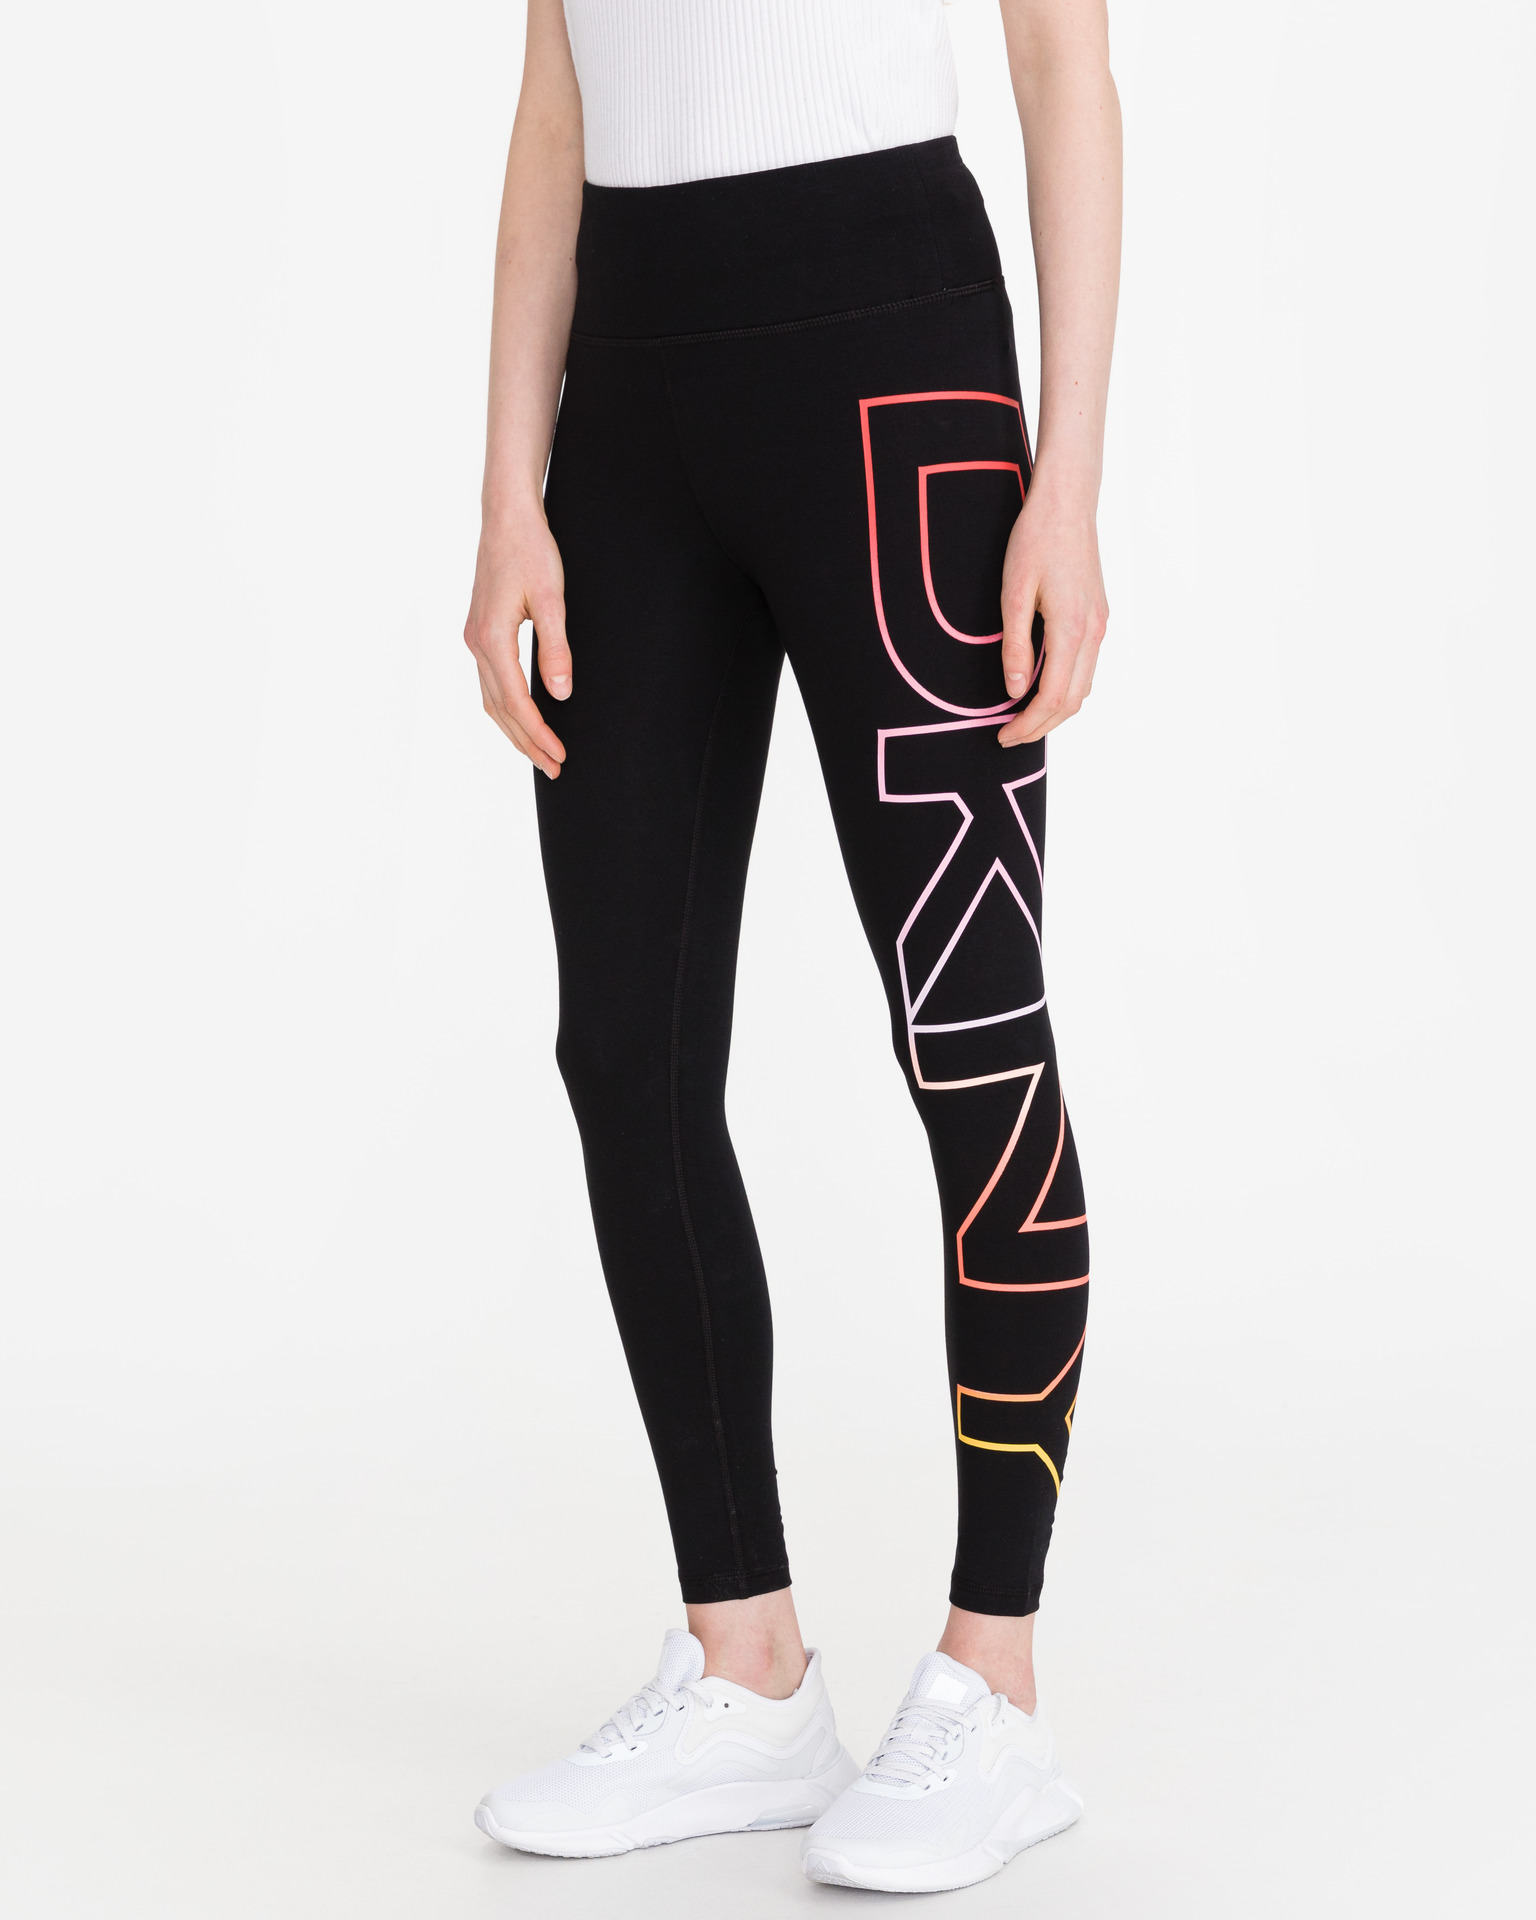 DKNY Printed stretch leggings